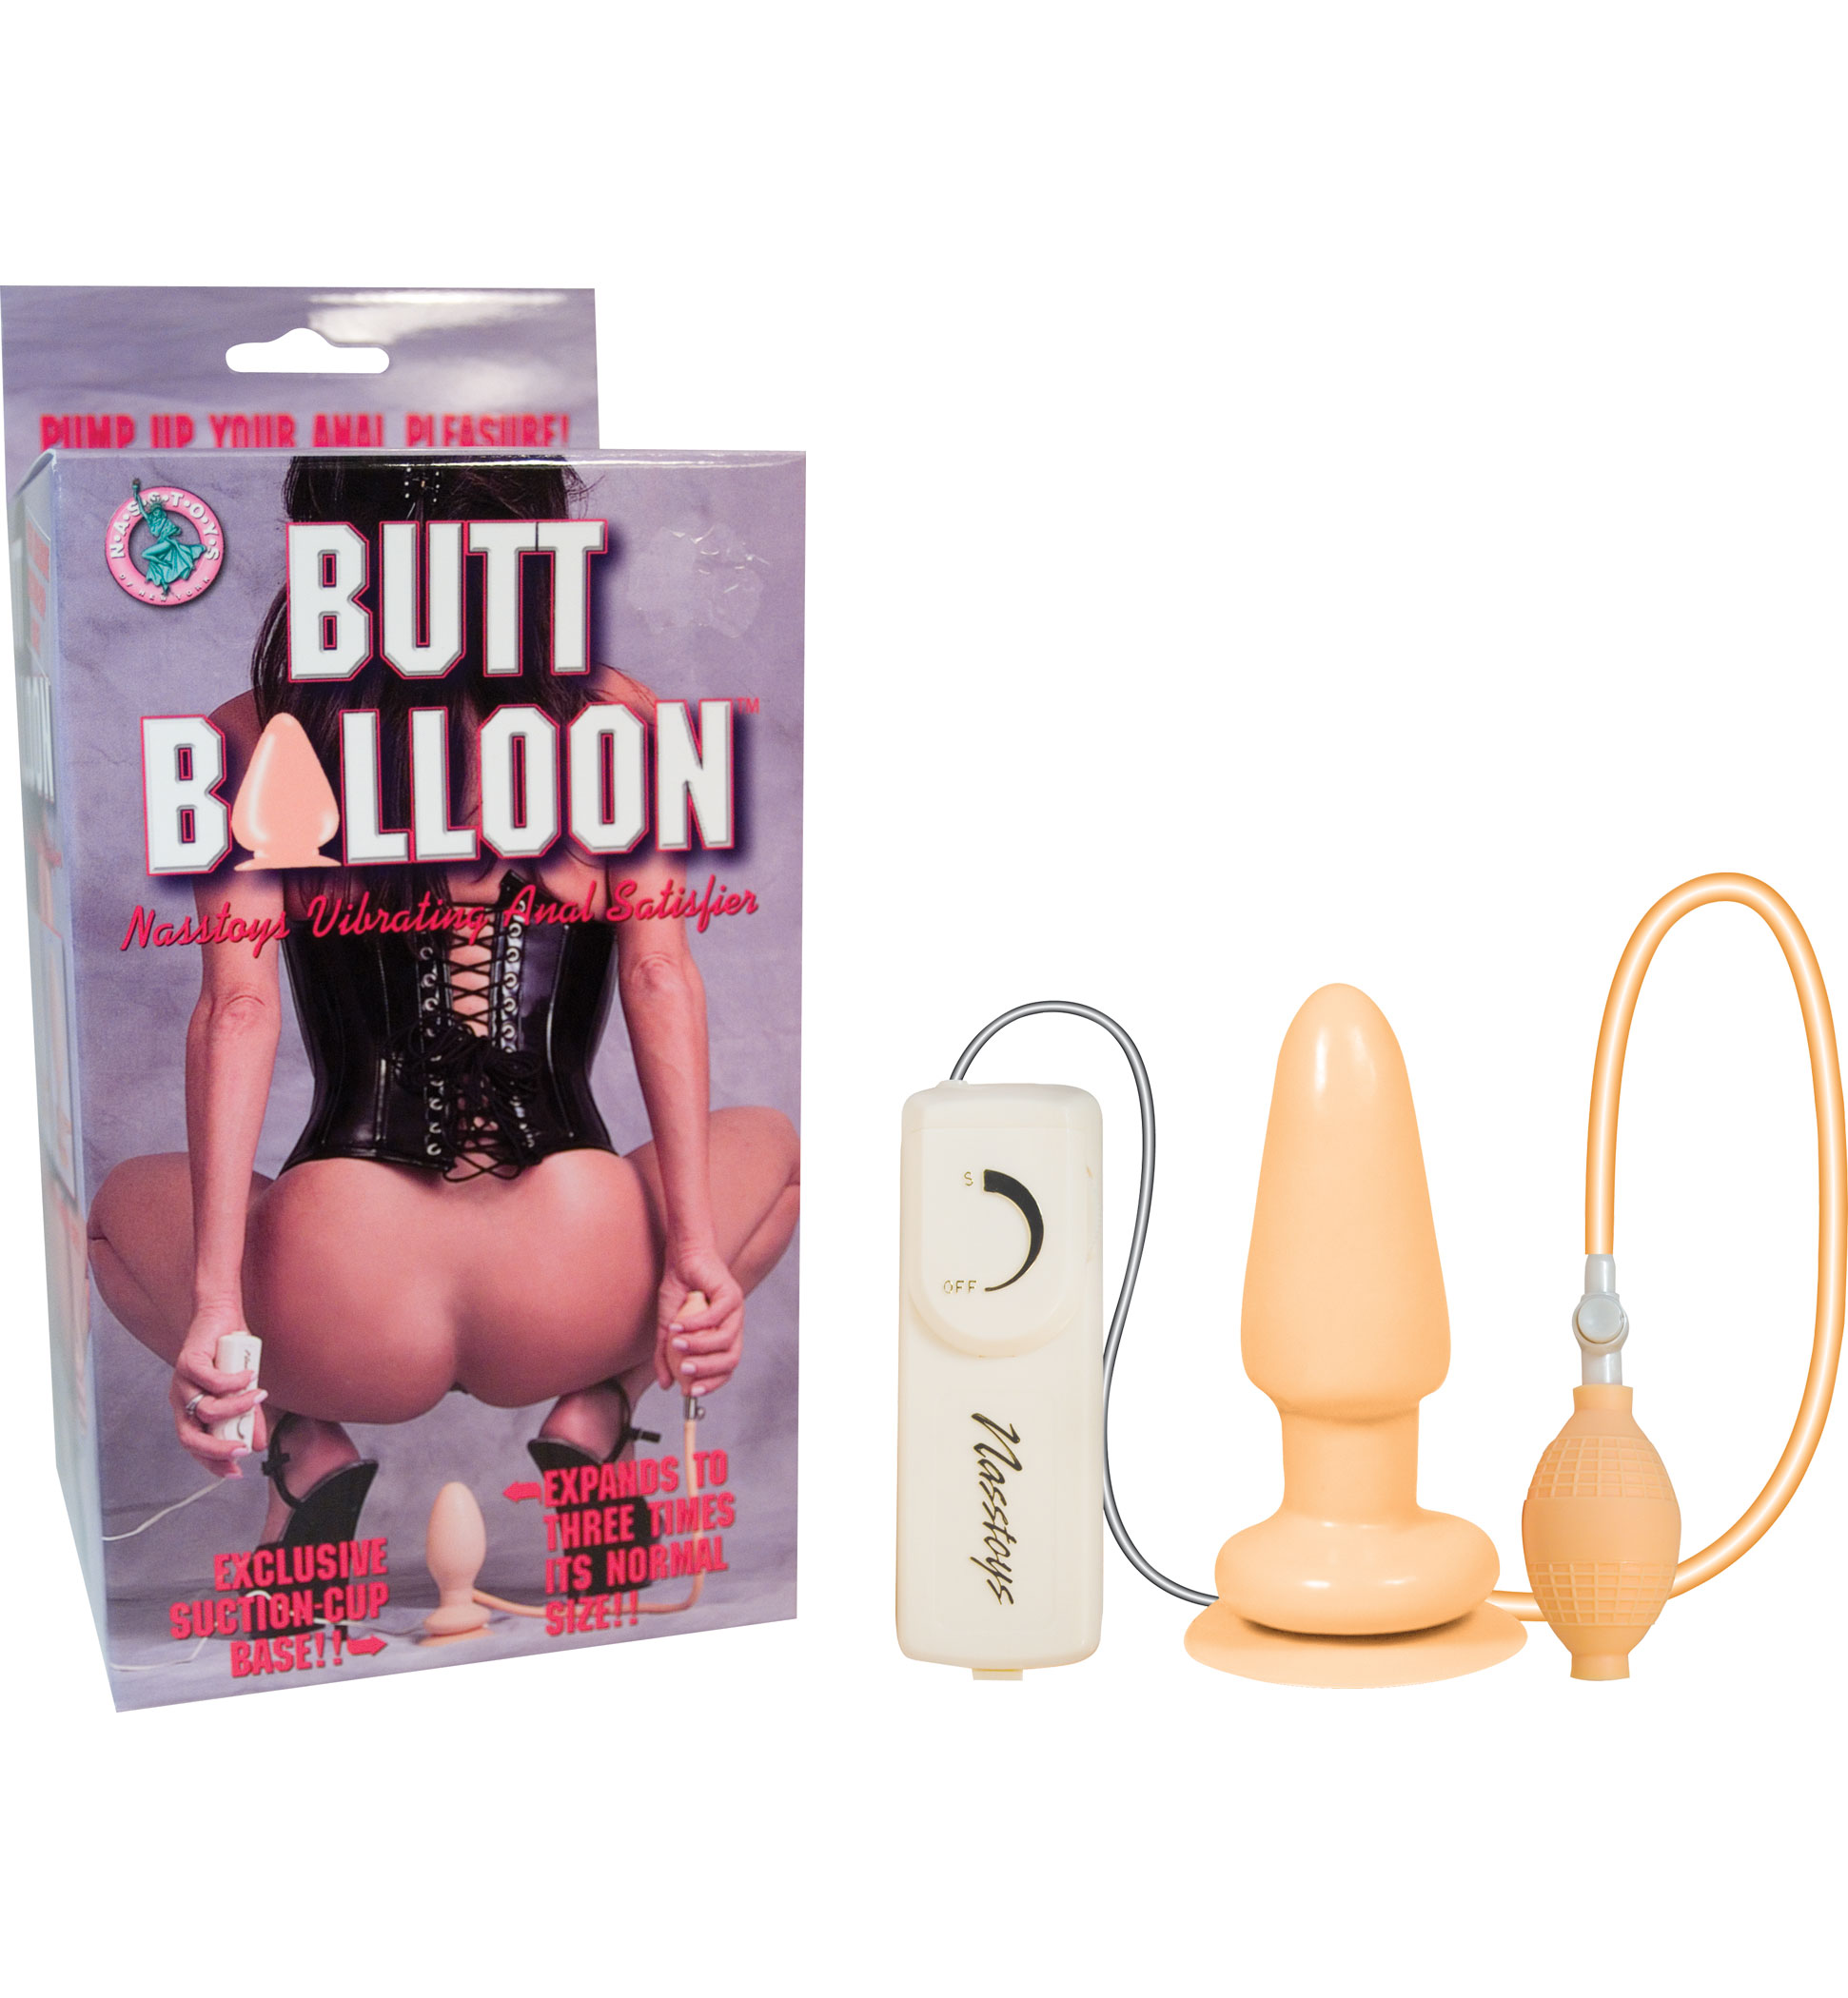 Butt+Balloon+Vibrating+Anal+Satisfier